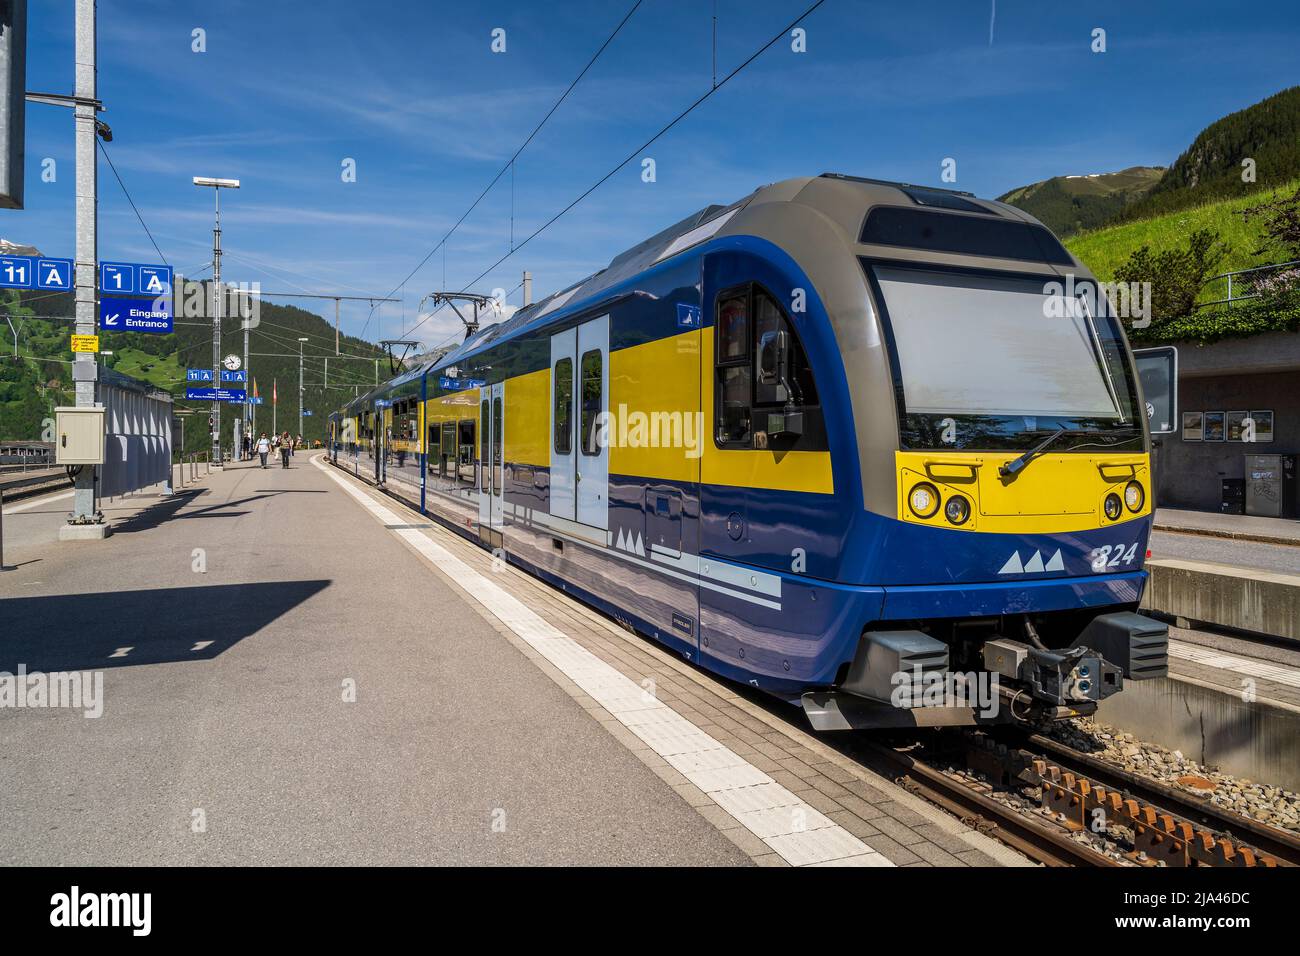 Passenger train at railway station, Grindelwald, Canton of Bern, Switzerland Stock Photo